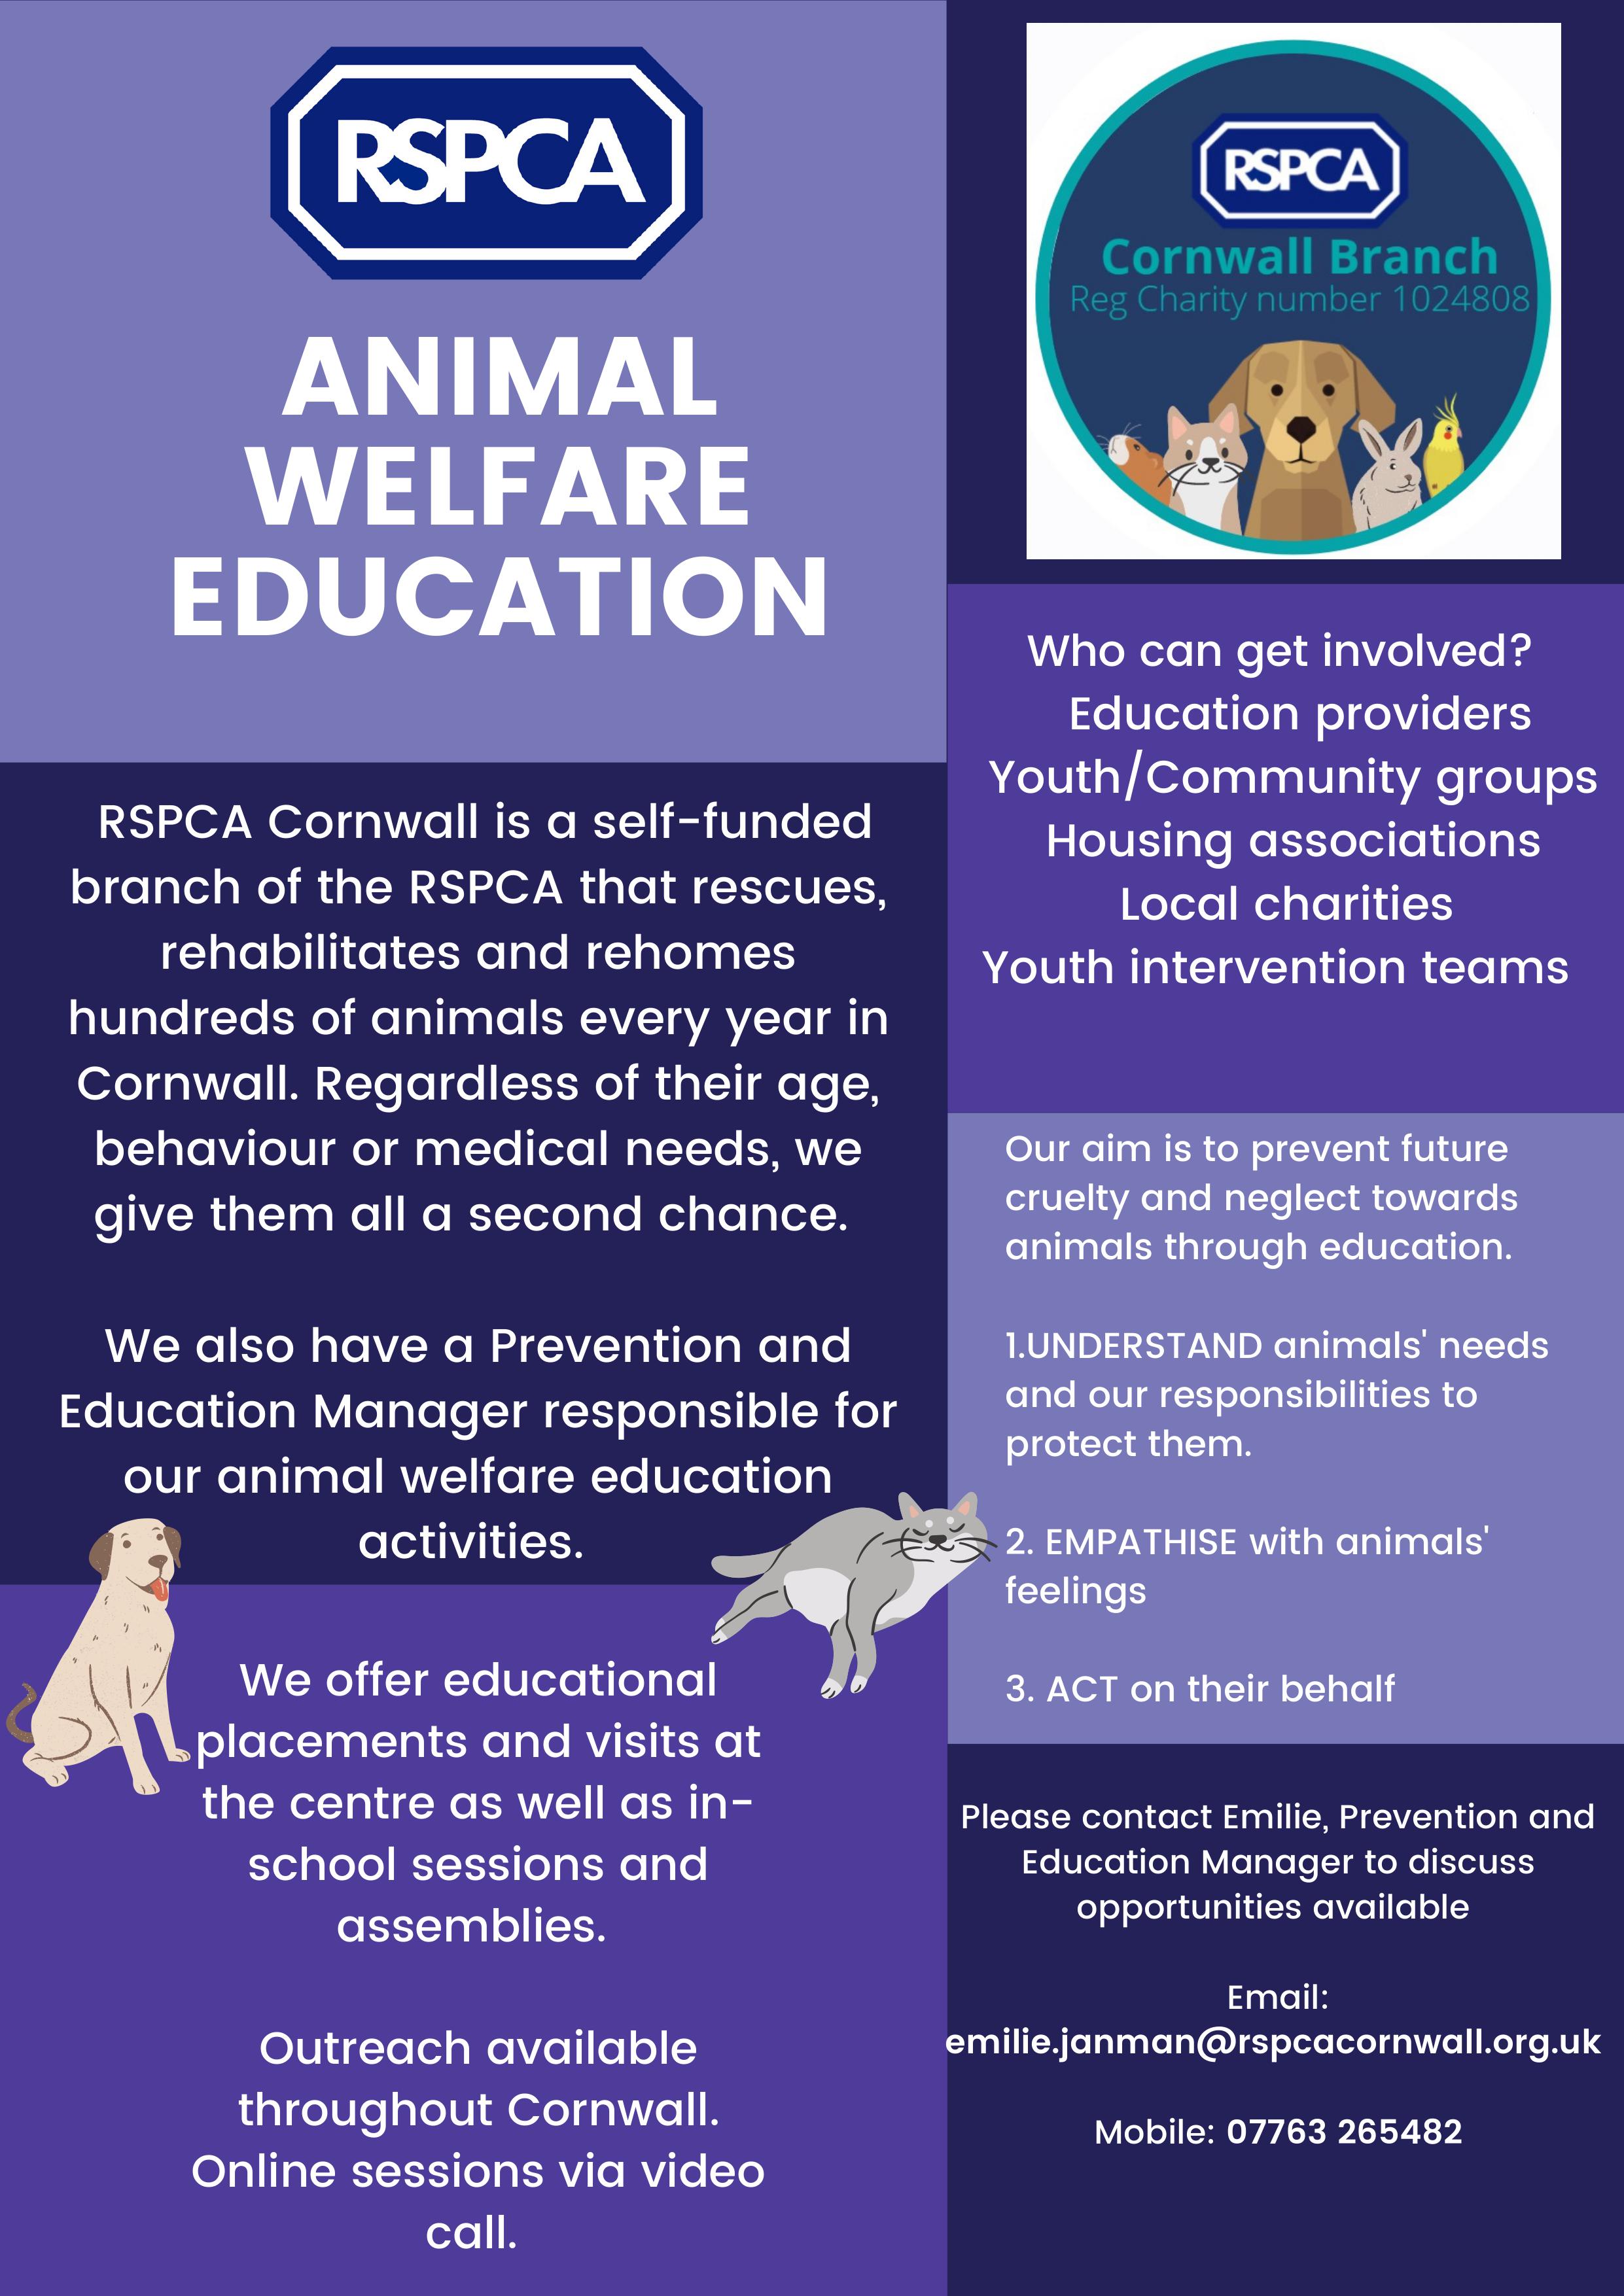 Animal Welfare and Education - RSPCA Cornwall Branch